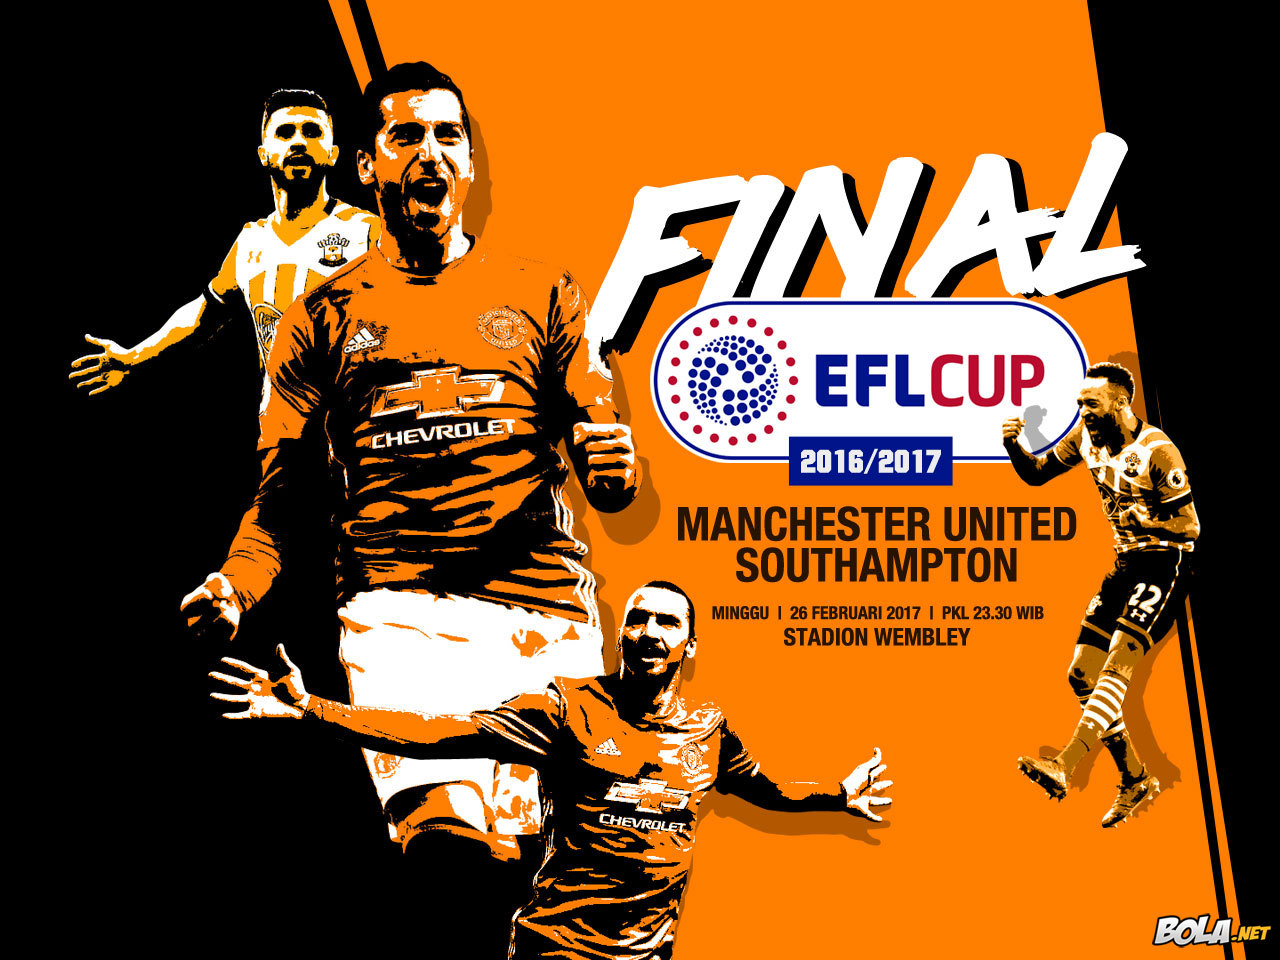 Deskripsi : Wallpaper Final Efl Cup 2016/2017, size: 1280x960